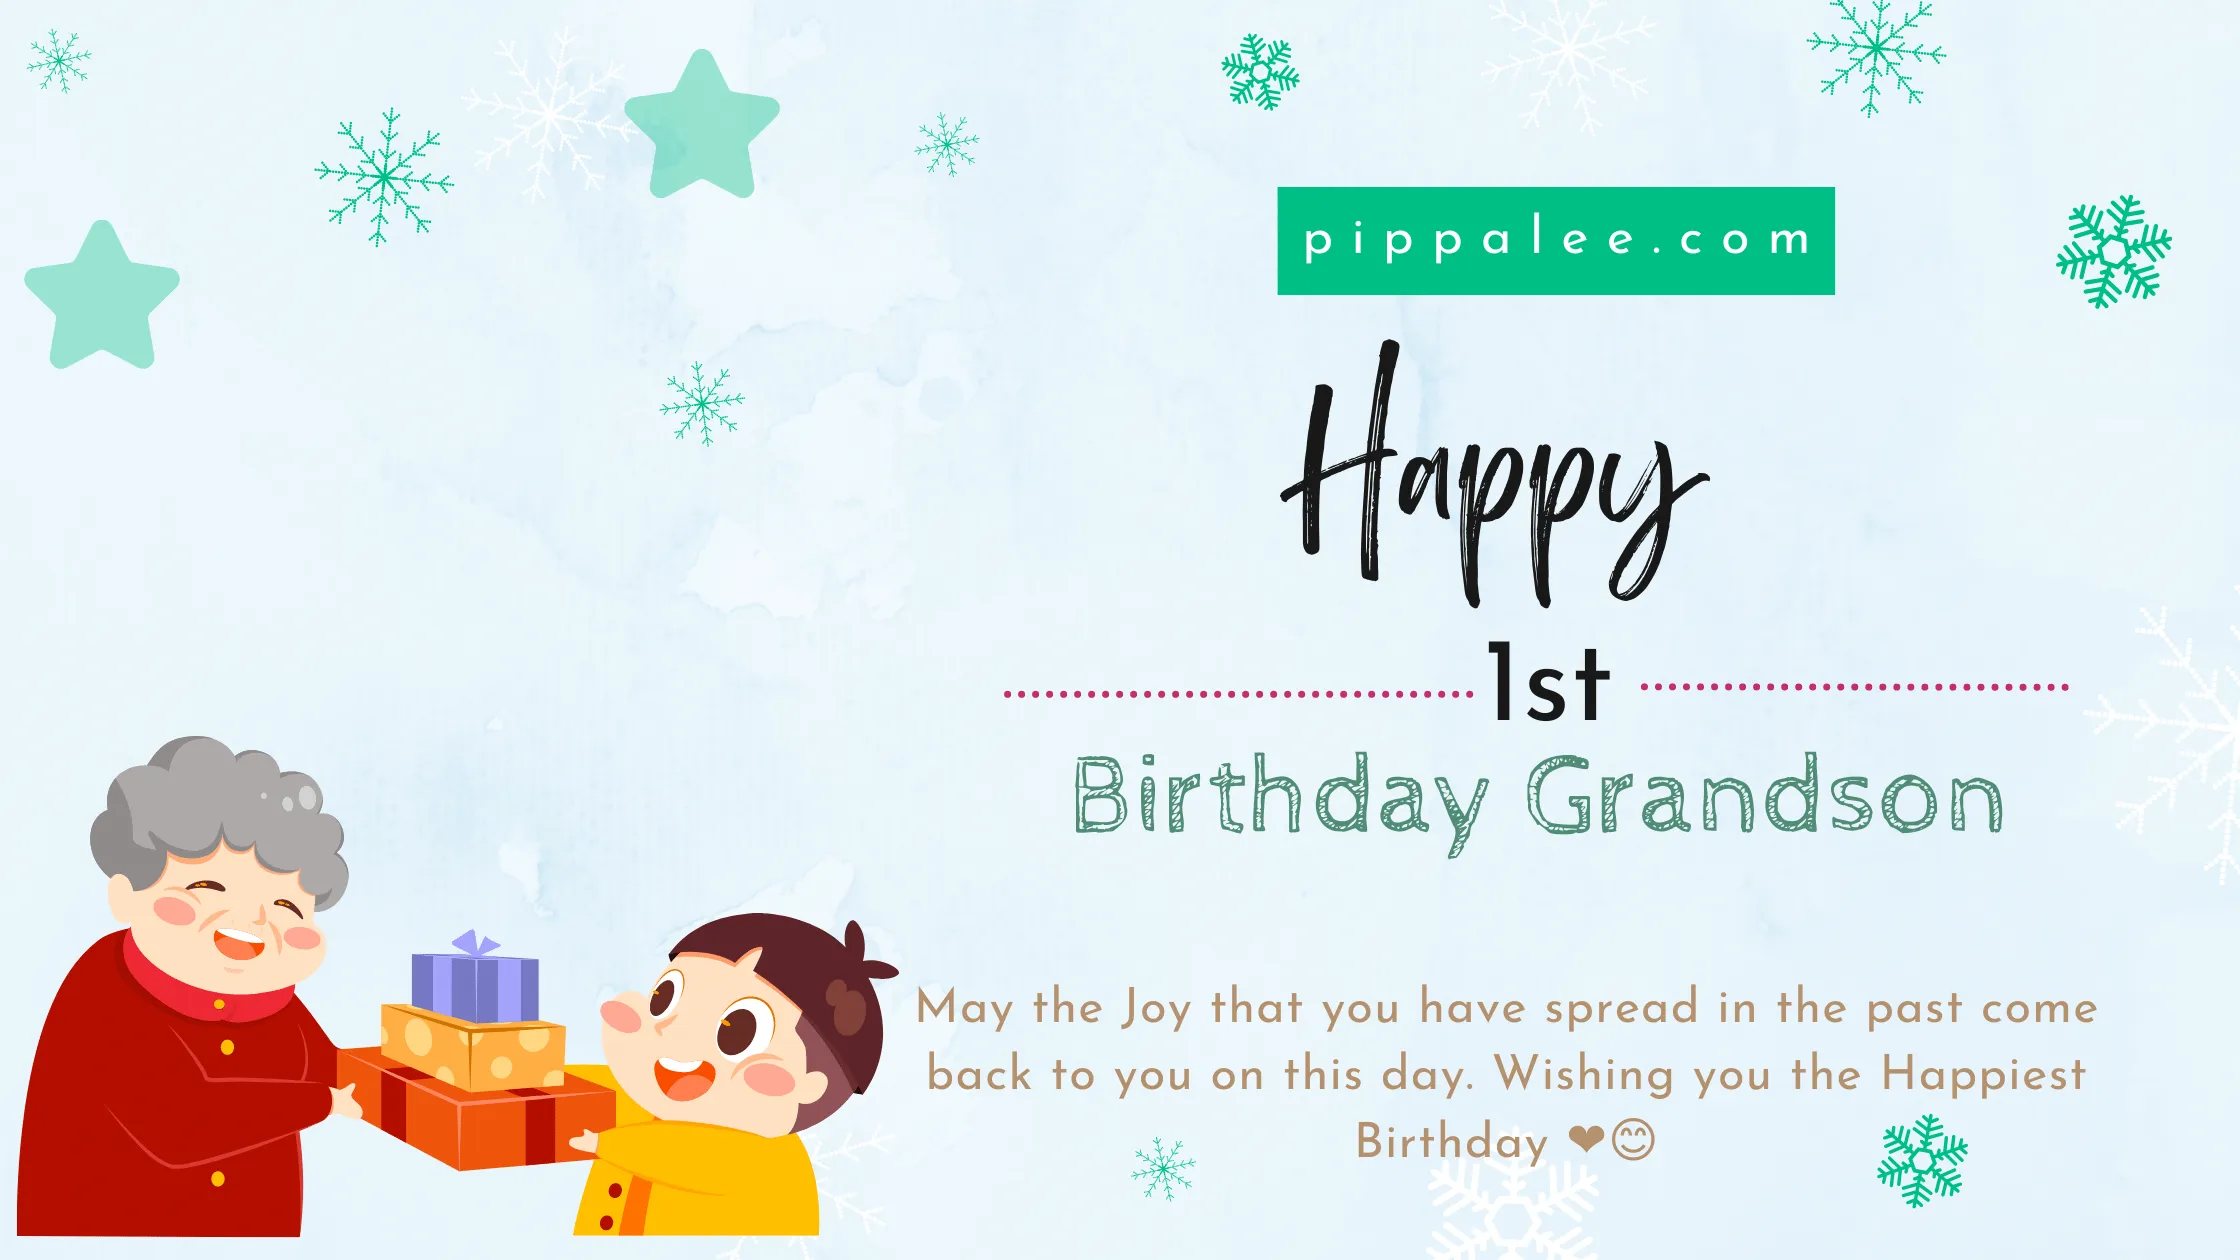 Happy 1st Birthday Grandson - Wishes & Messages